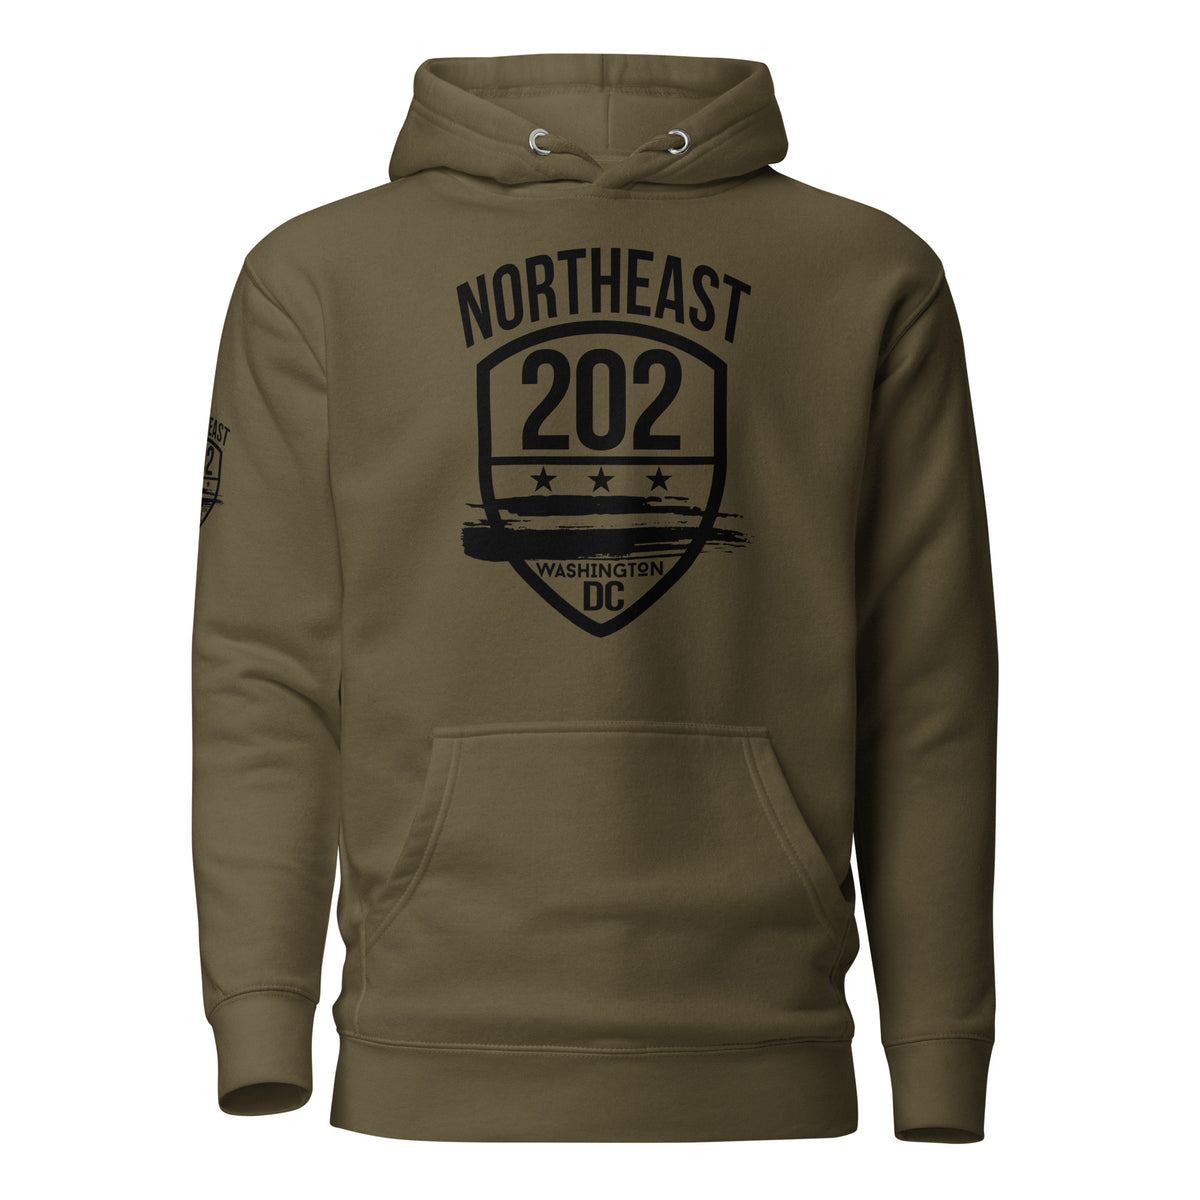 'NORTHEAST/202' Emblem on Green Unisex Hoodie